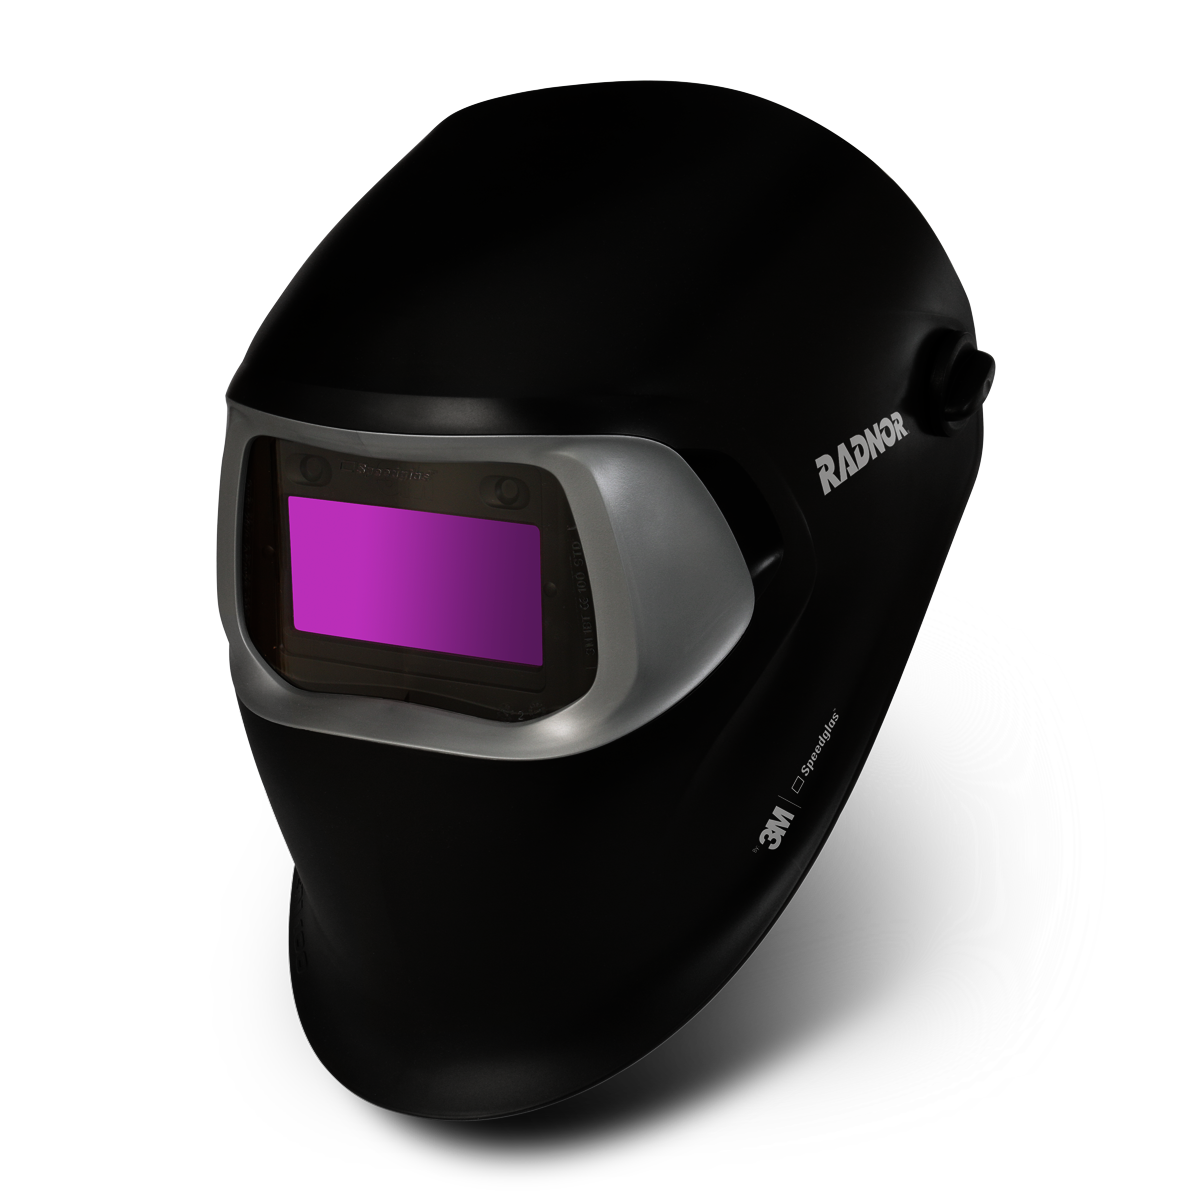 3M Speedglas Welding Helmet Headband and Mounting Hardware Safety for sale online 